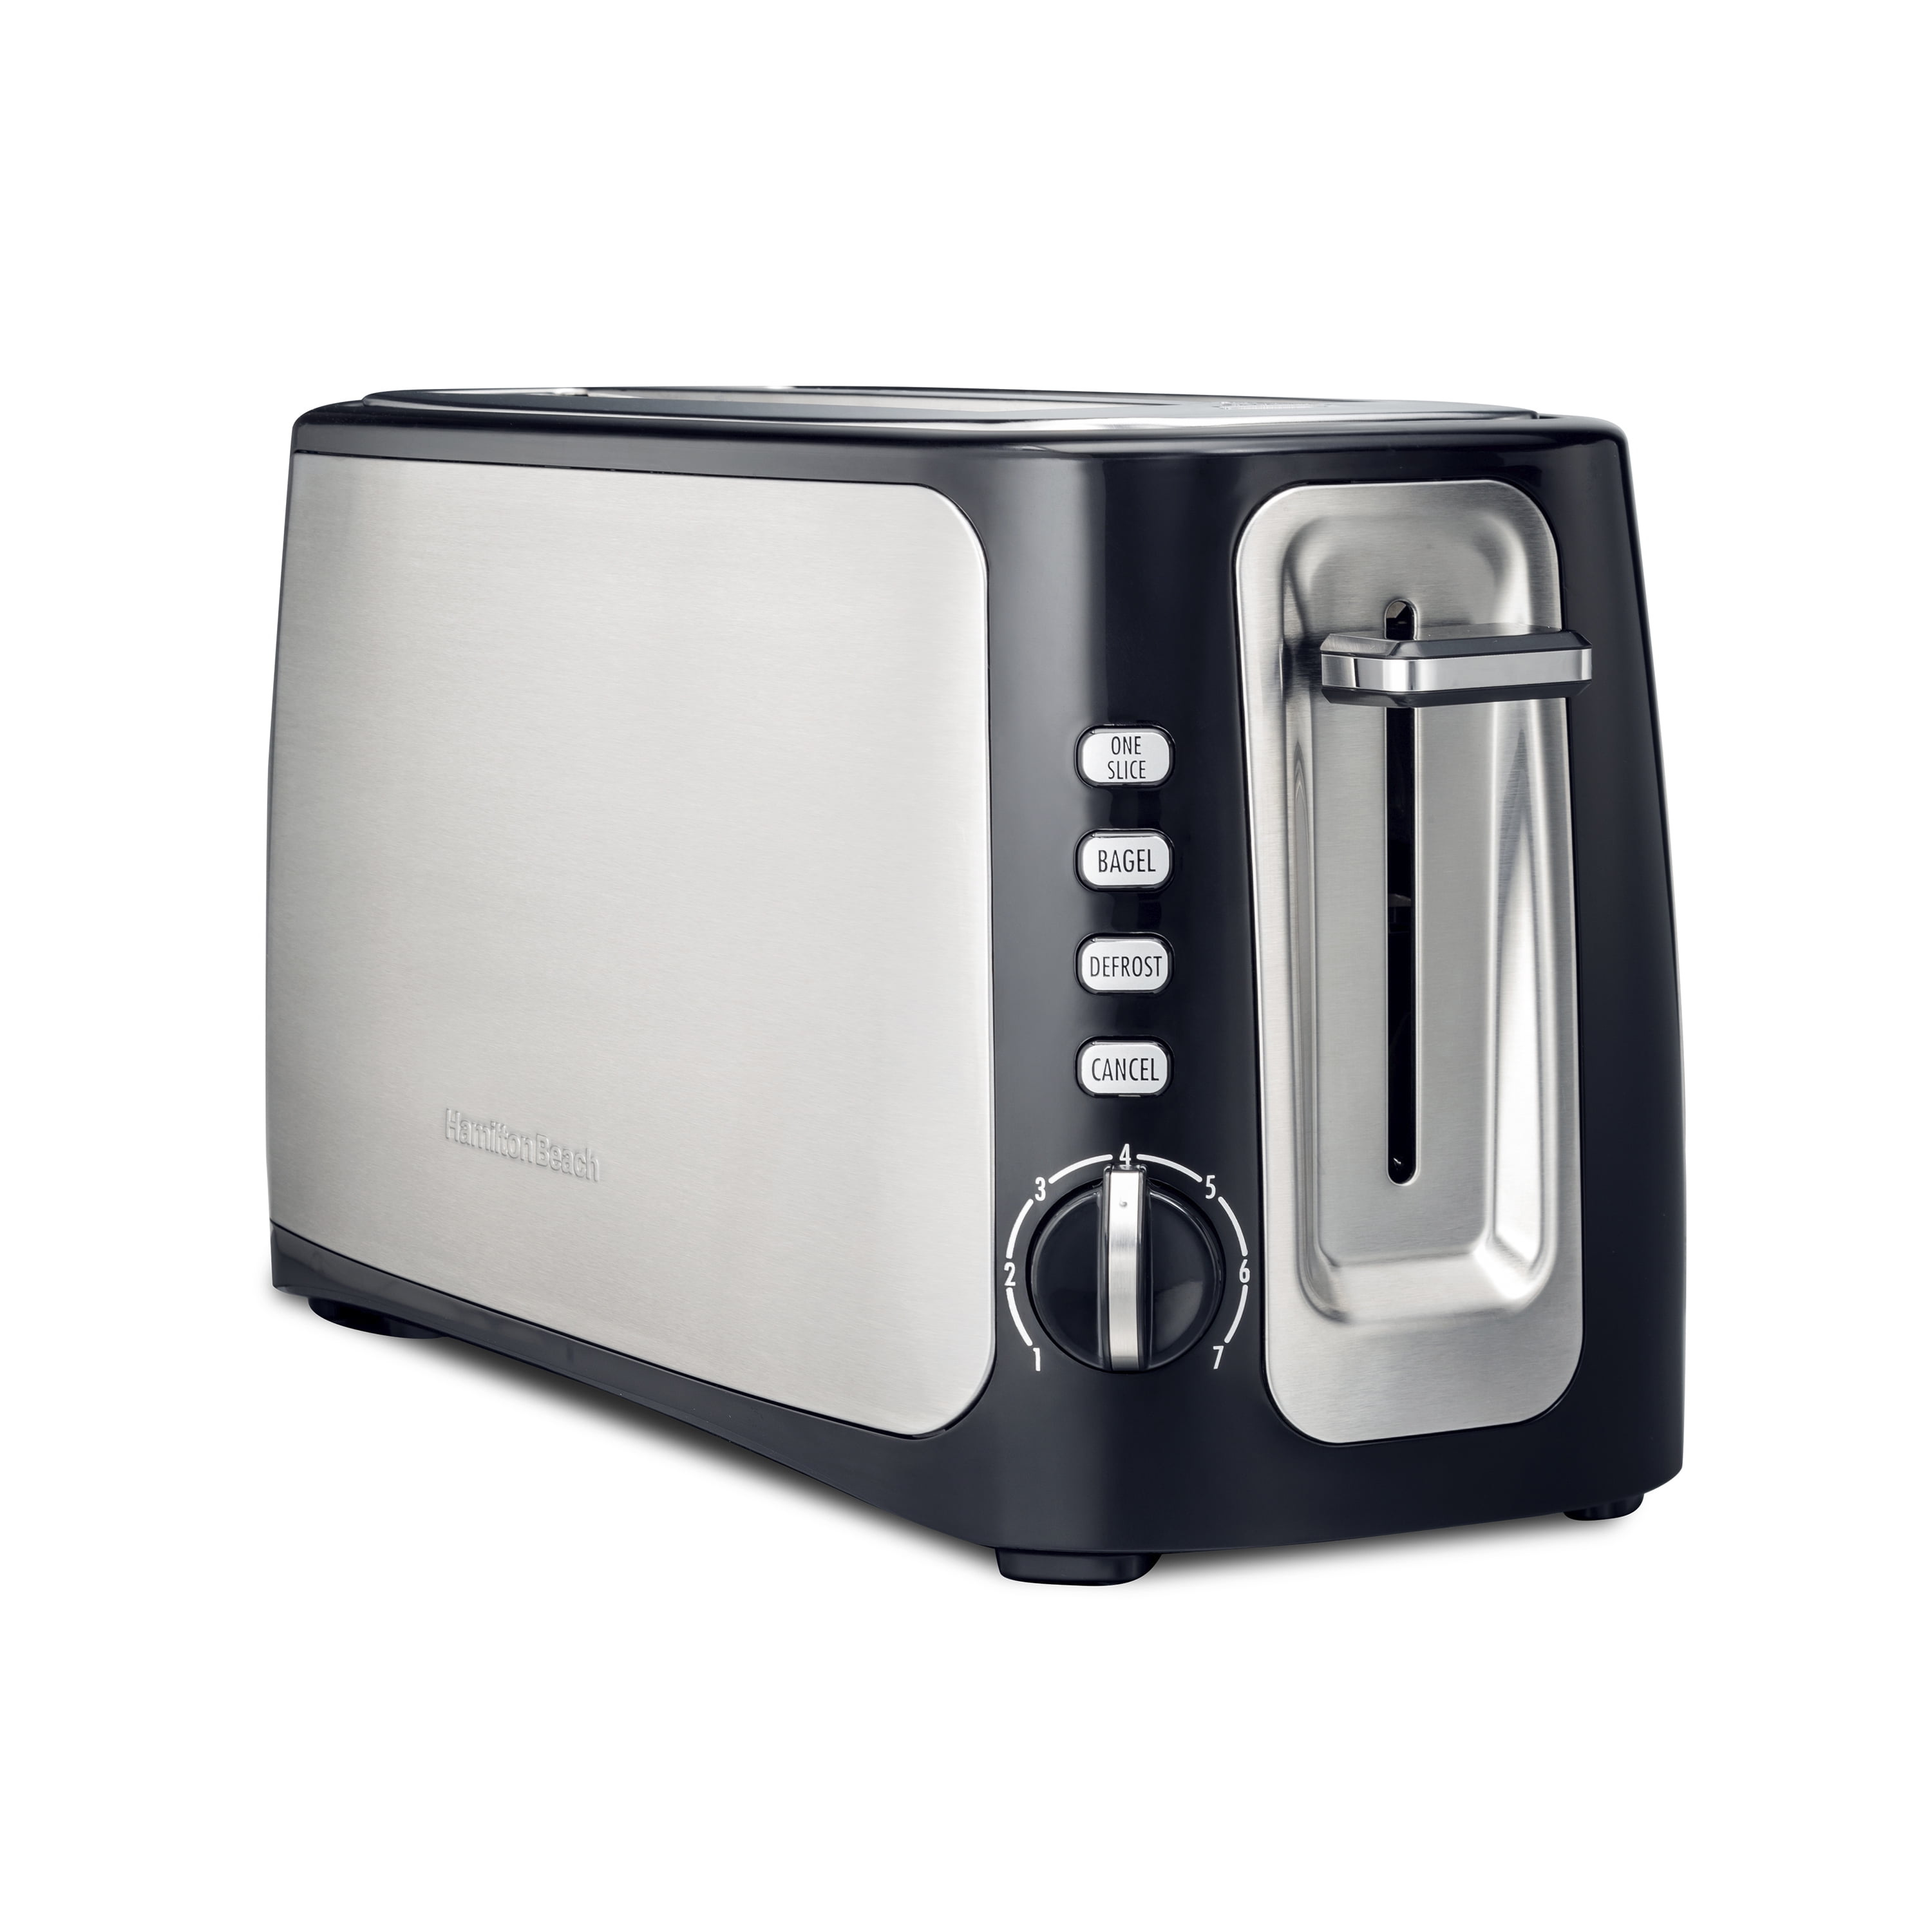 Hamilton Beach Brands Inc. 24810 Keep Warm 4-Slice Toaster